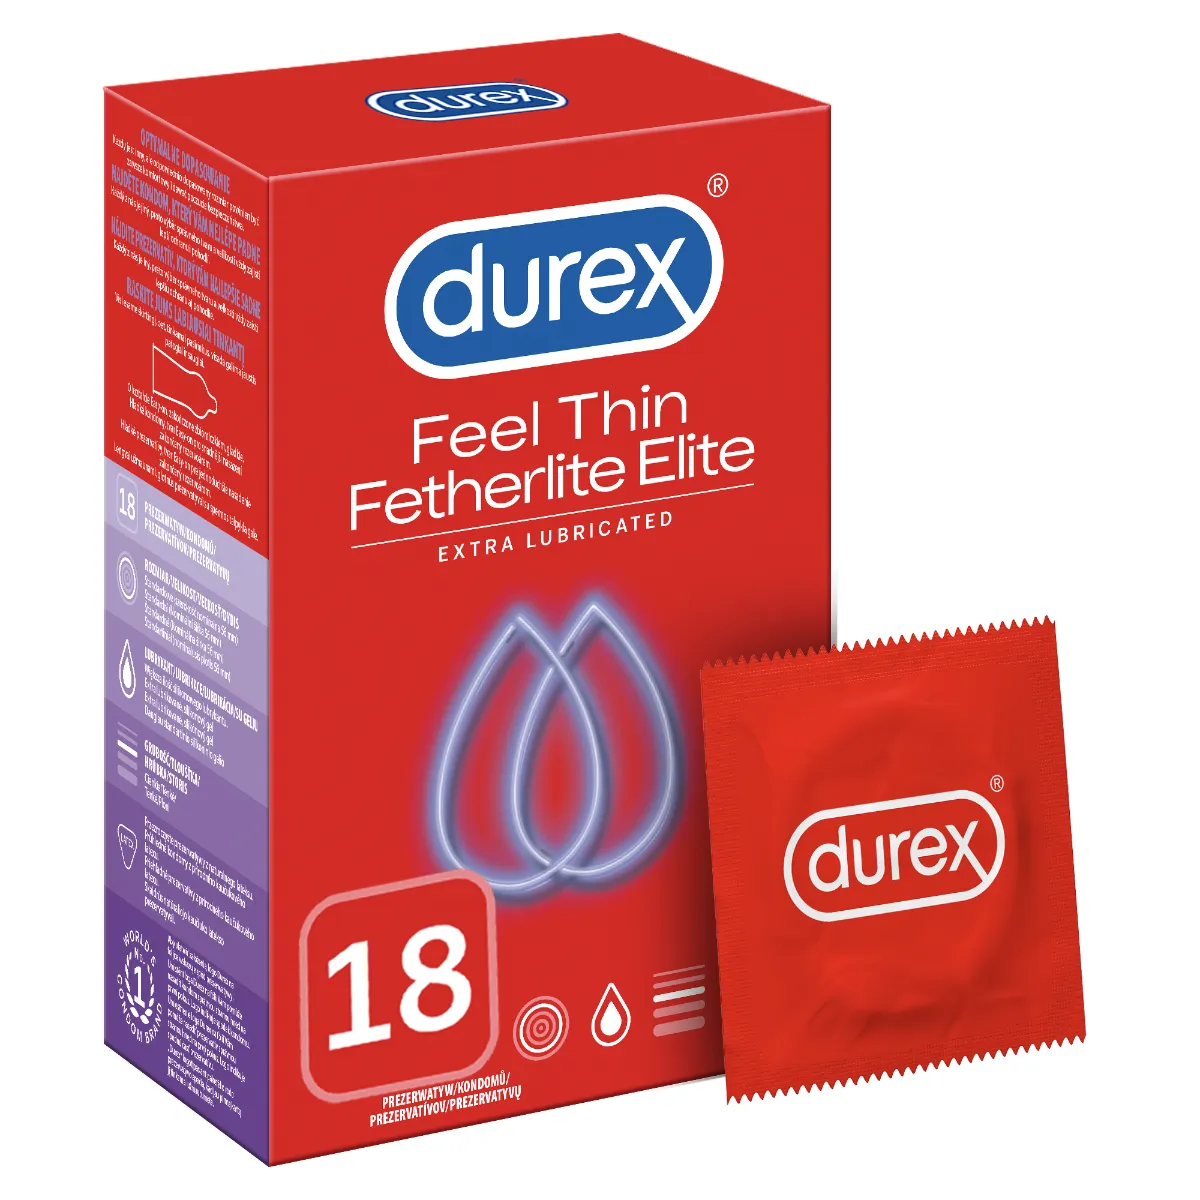 Durex Feel Thin Fetherlite Elite prezerwatywy, 18 szt. 